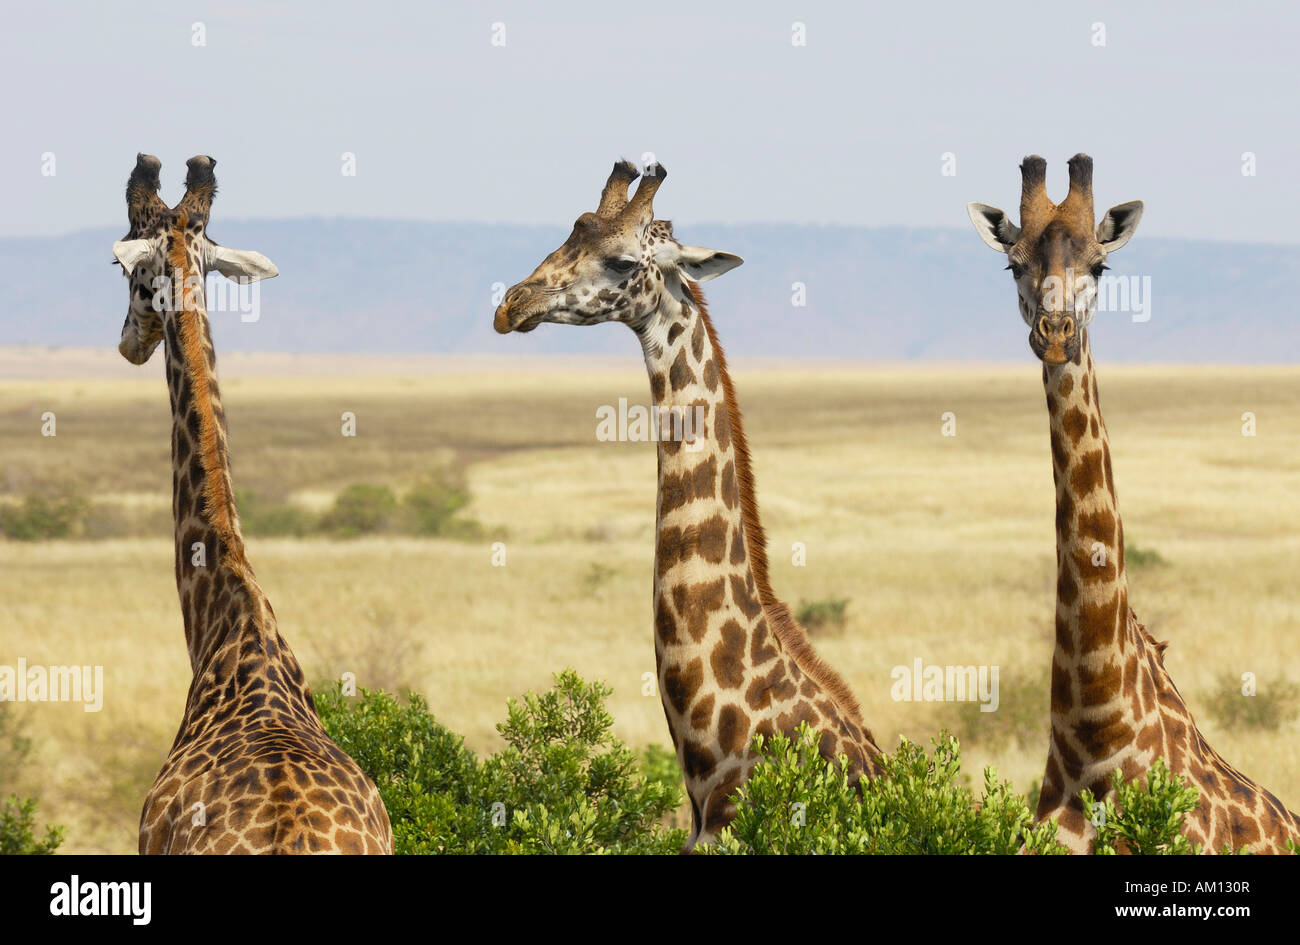 Masai Giraffe, Girafe (Giraffa camelopardalis), trois girafes, avant, côté et arrière, Masai Mara, Kenya Banque D'Images